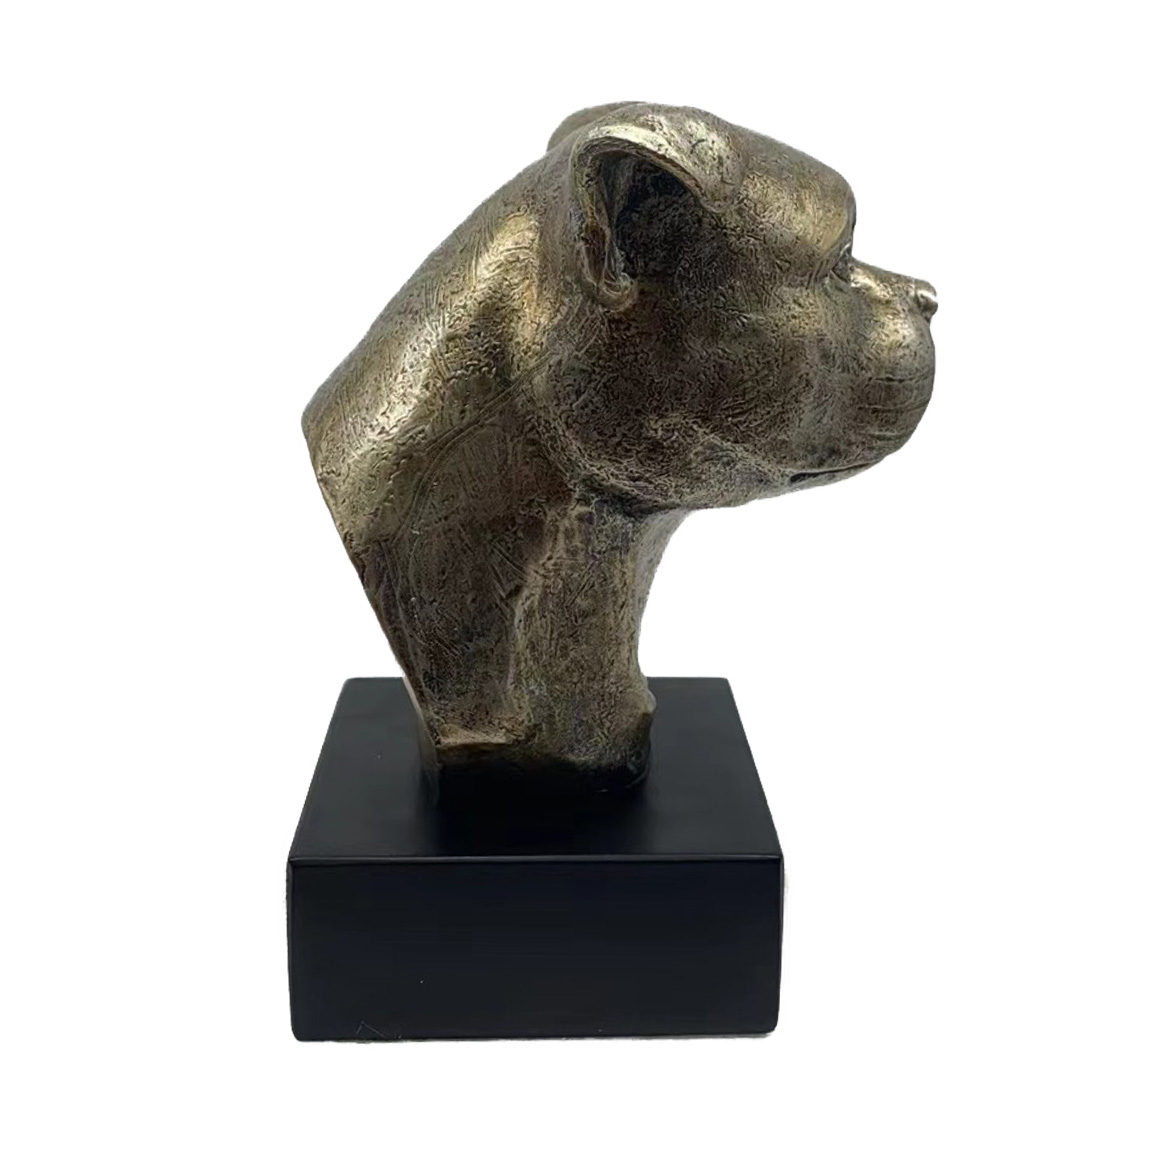 Bronze Hund Statue 15"Staffordshire bull terrier"